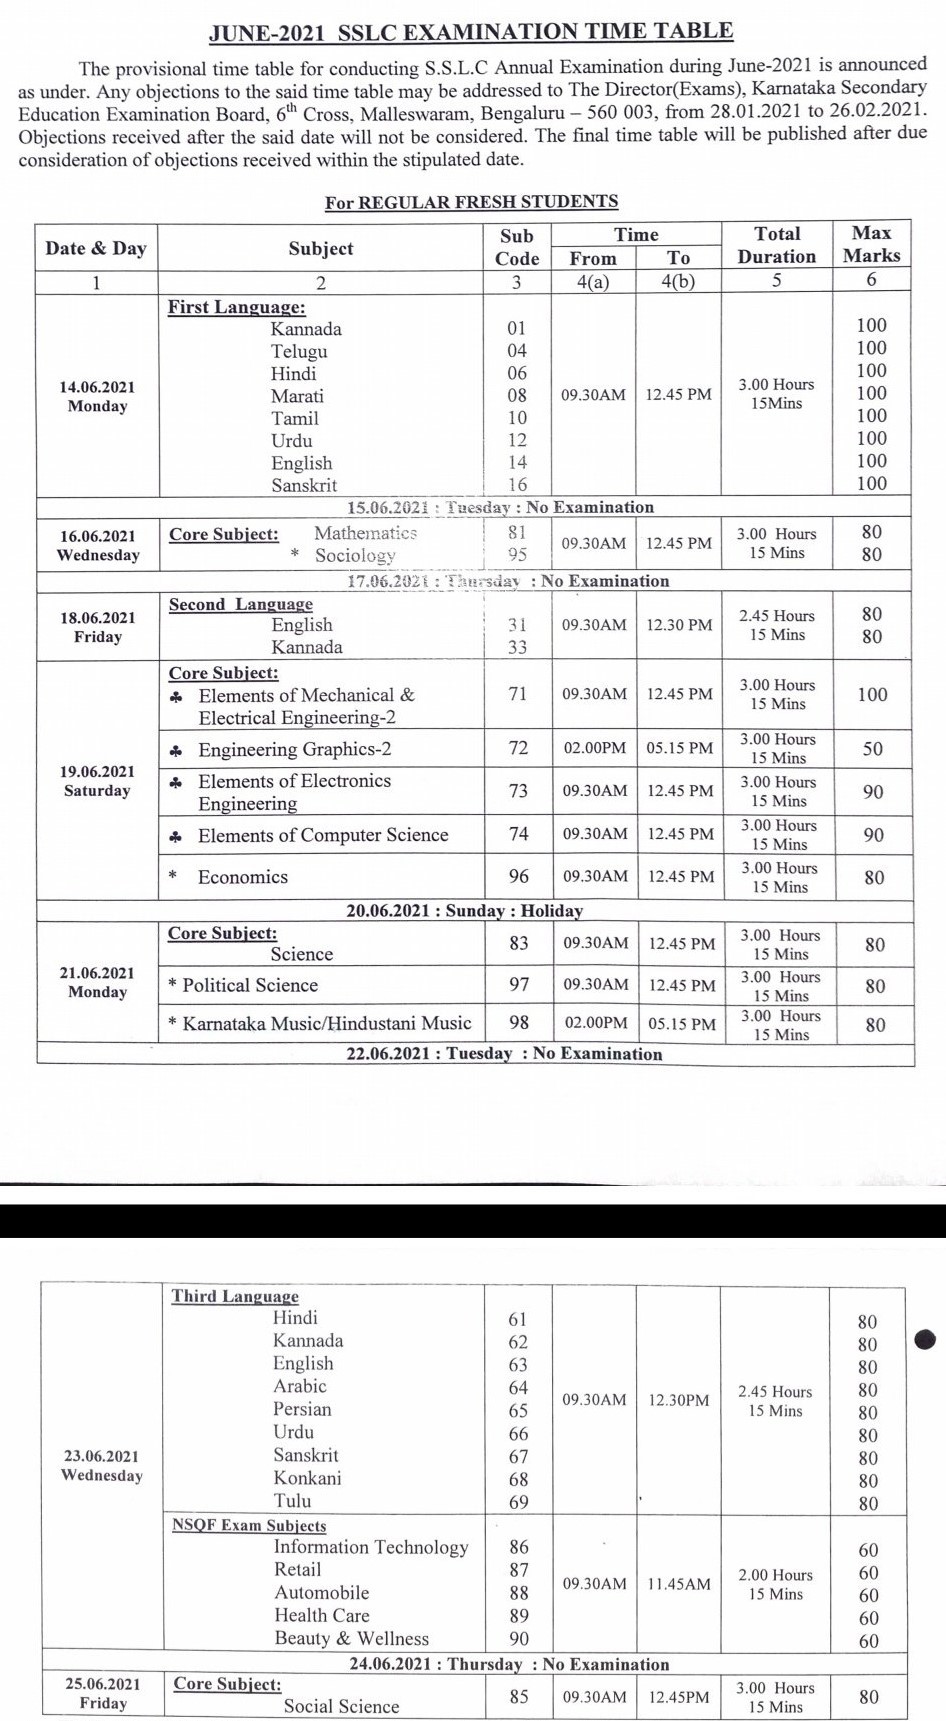 Karnataka SSLC exam to begin from June 14 tentative schedule released